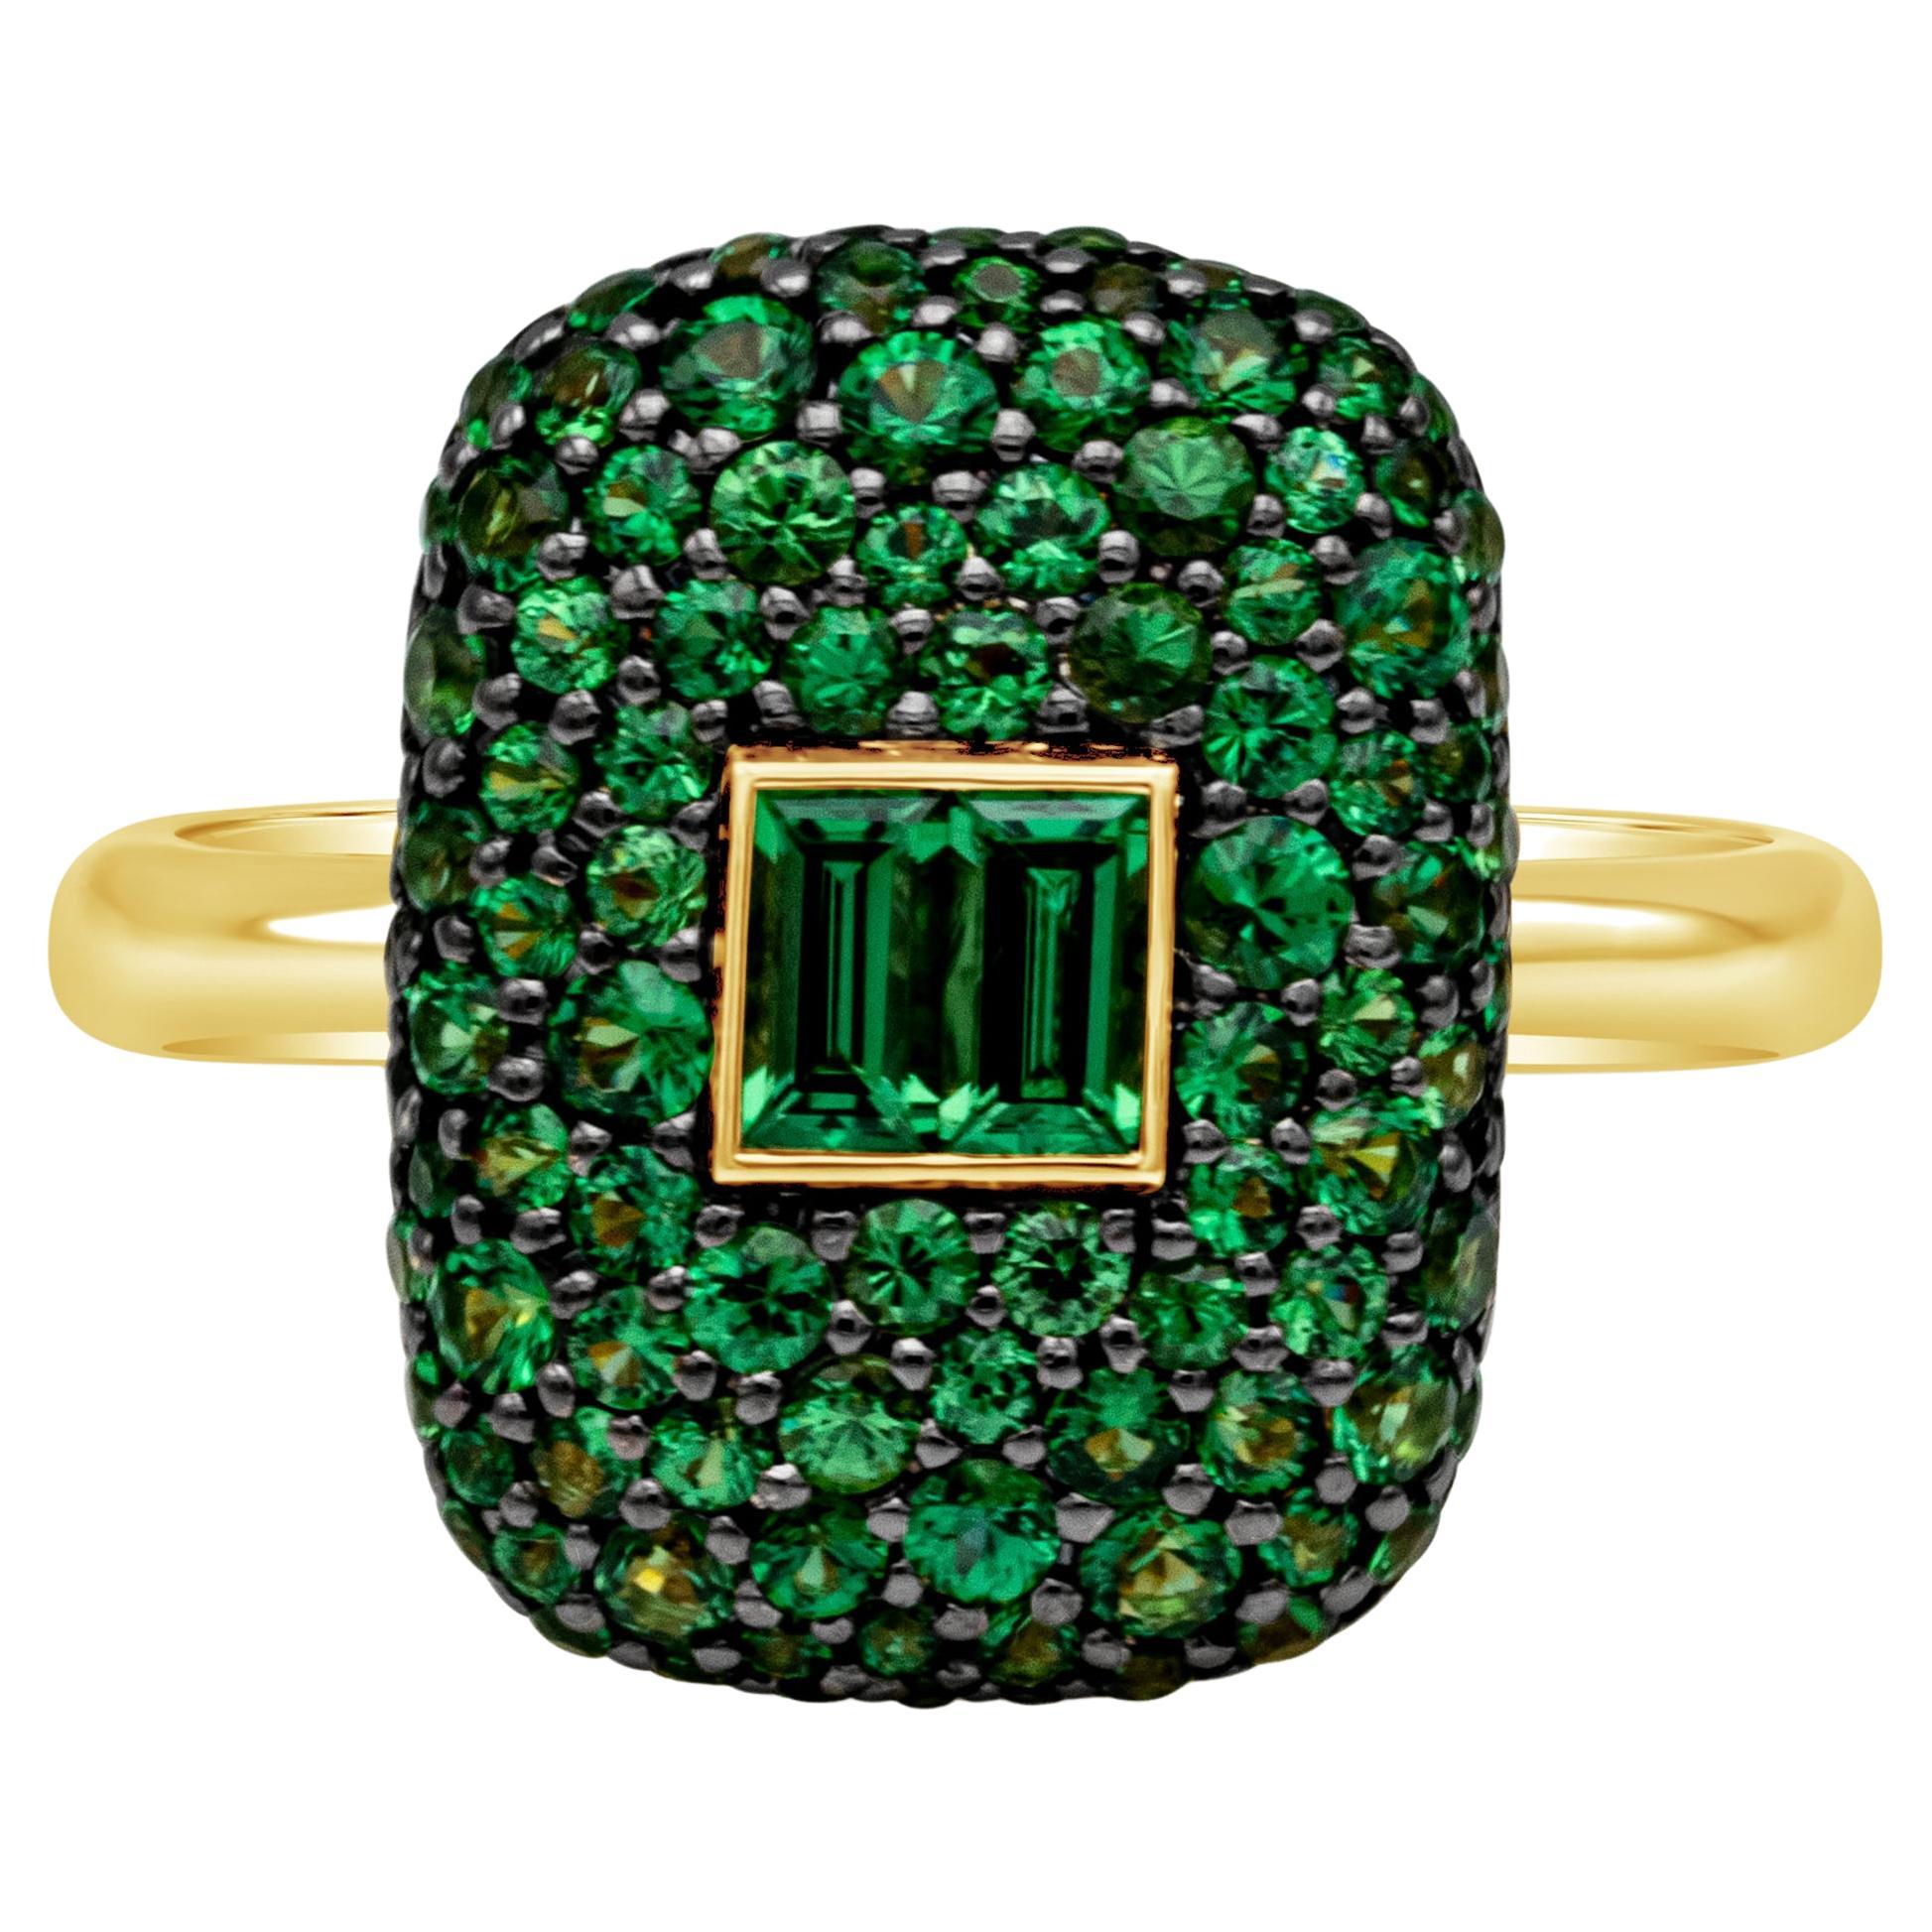 Roman Malakov  1.57 Carat Total Mixed Cut Green Tsavorite Fashion Ring